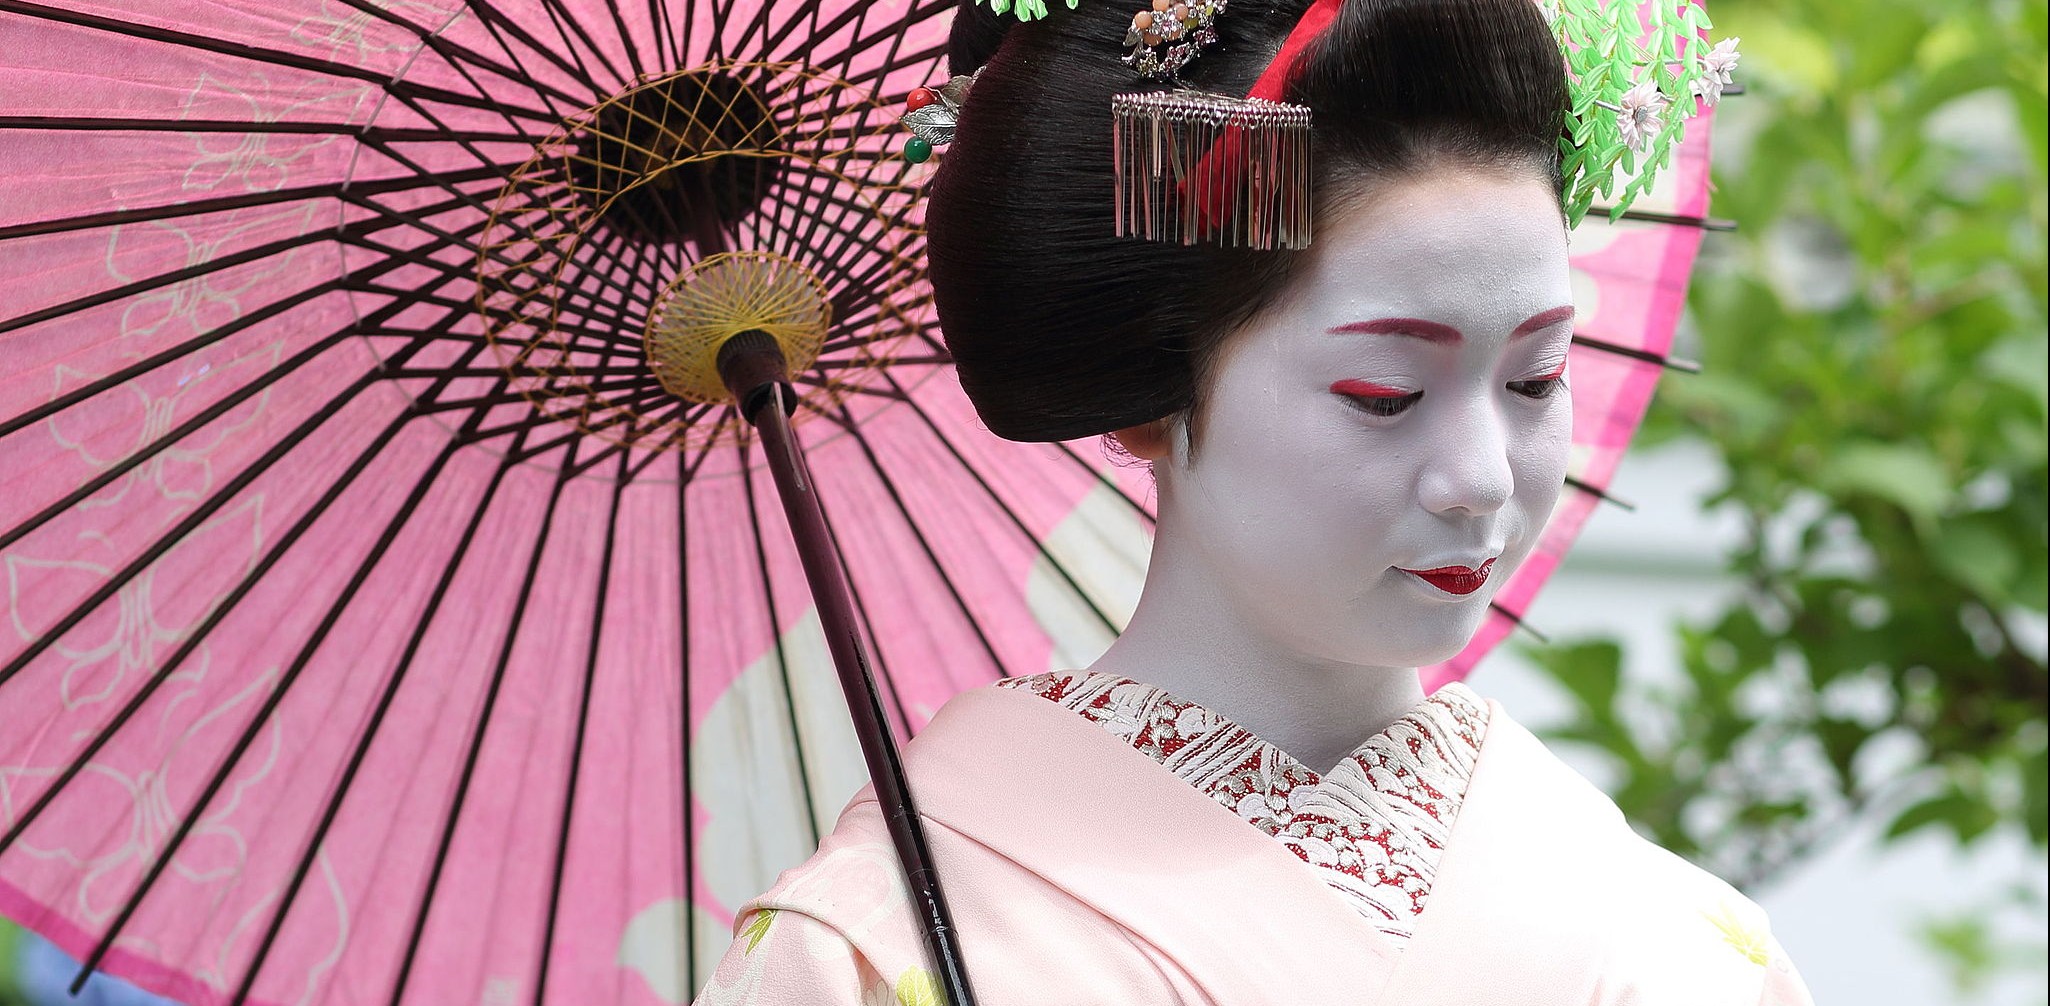 maiko, temple, Japan, geisha